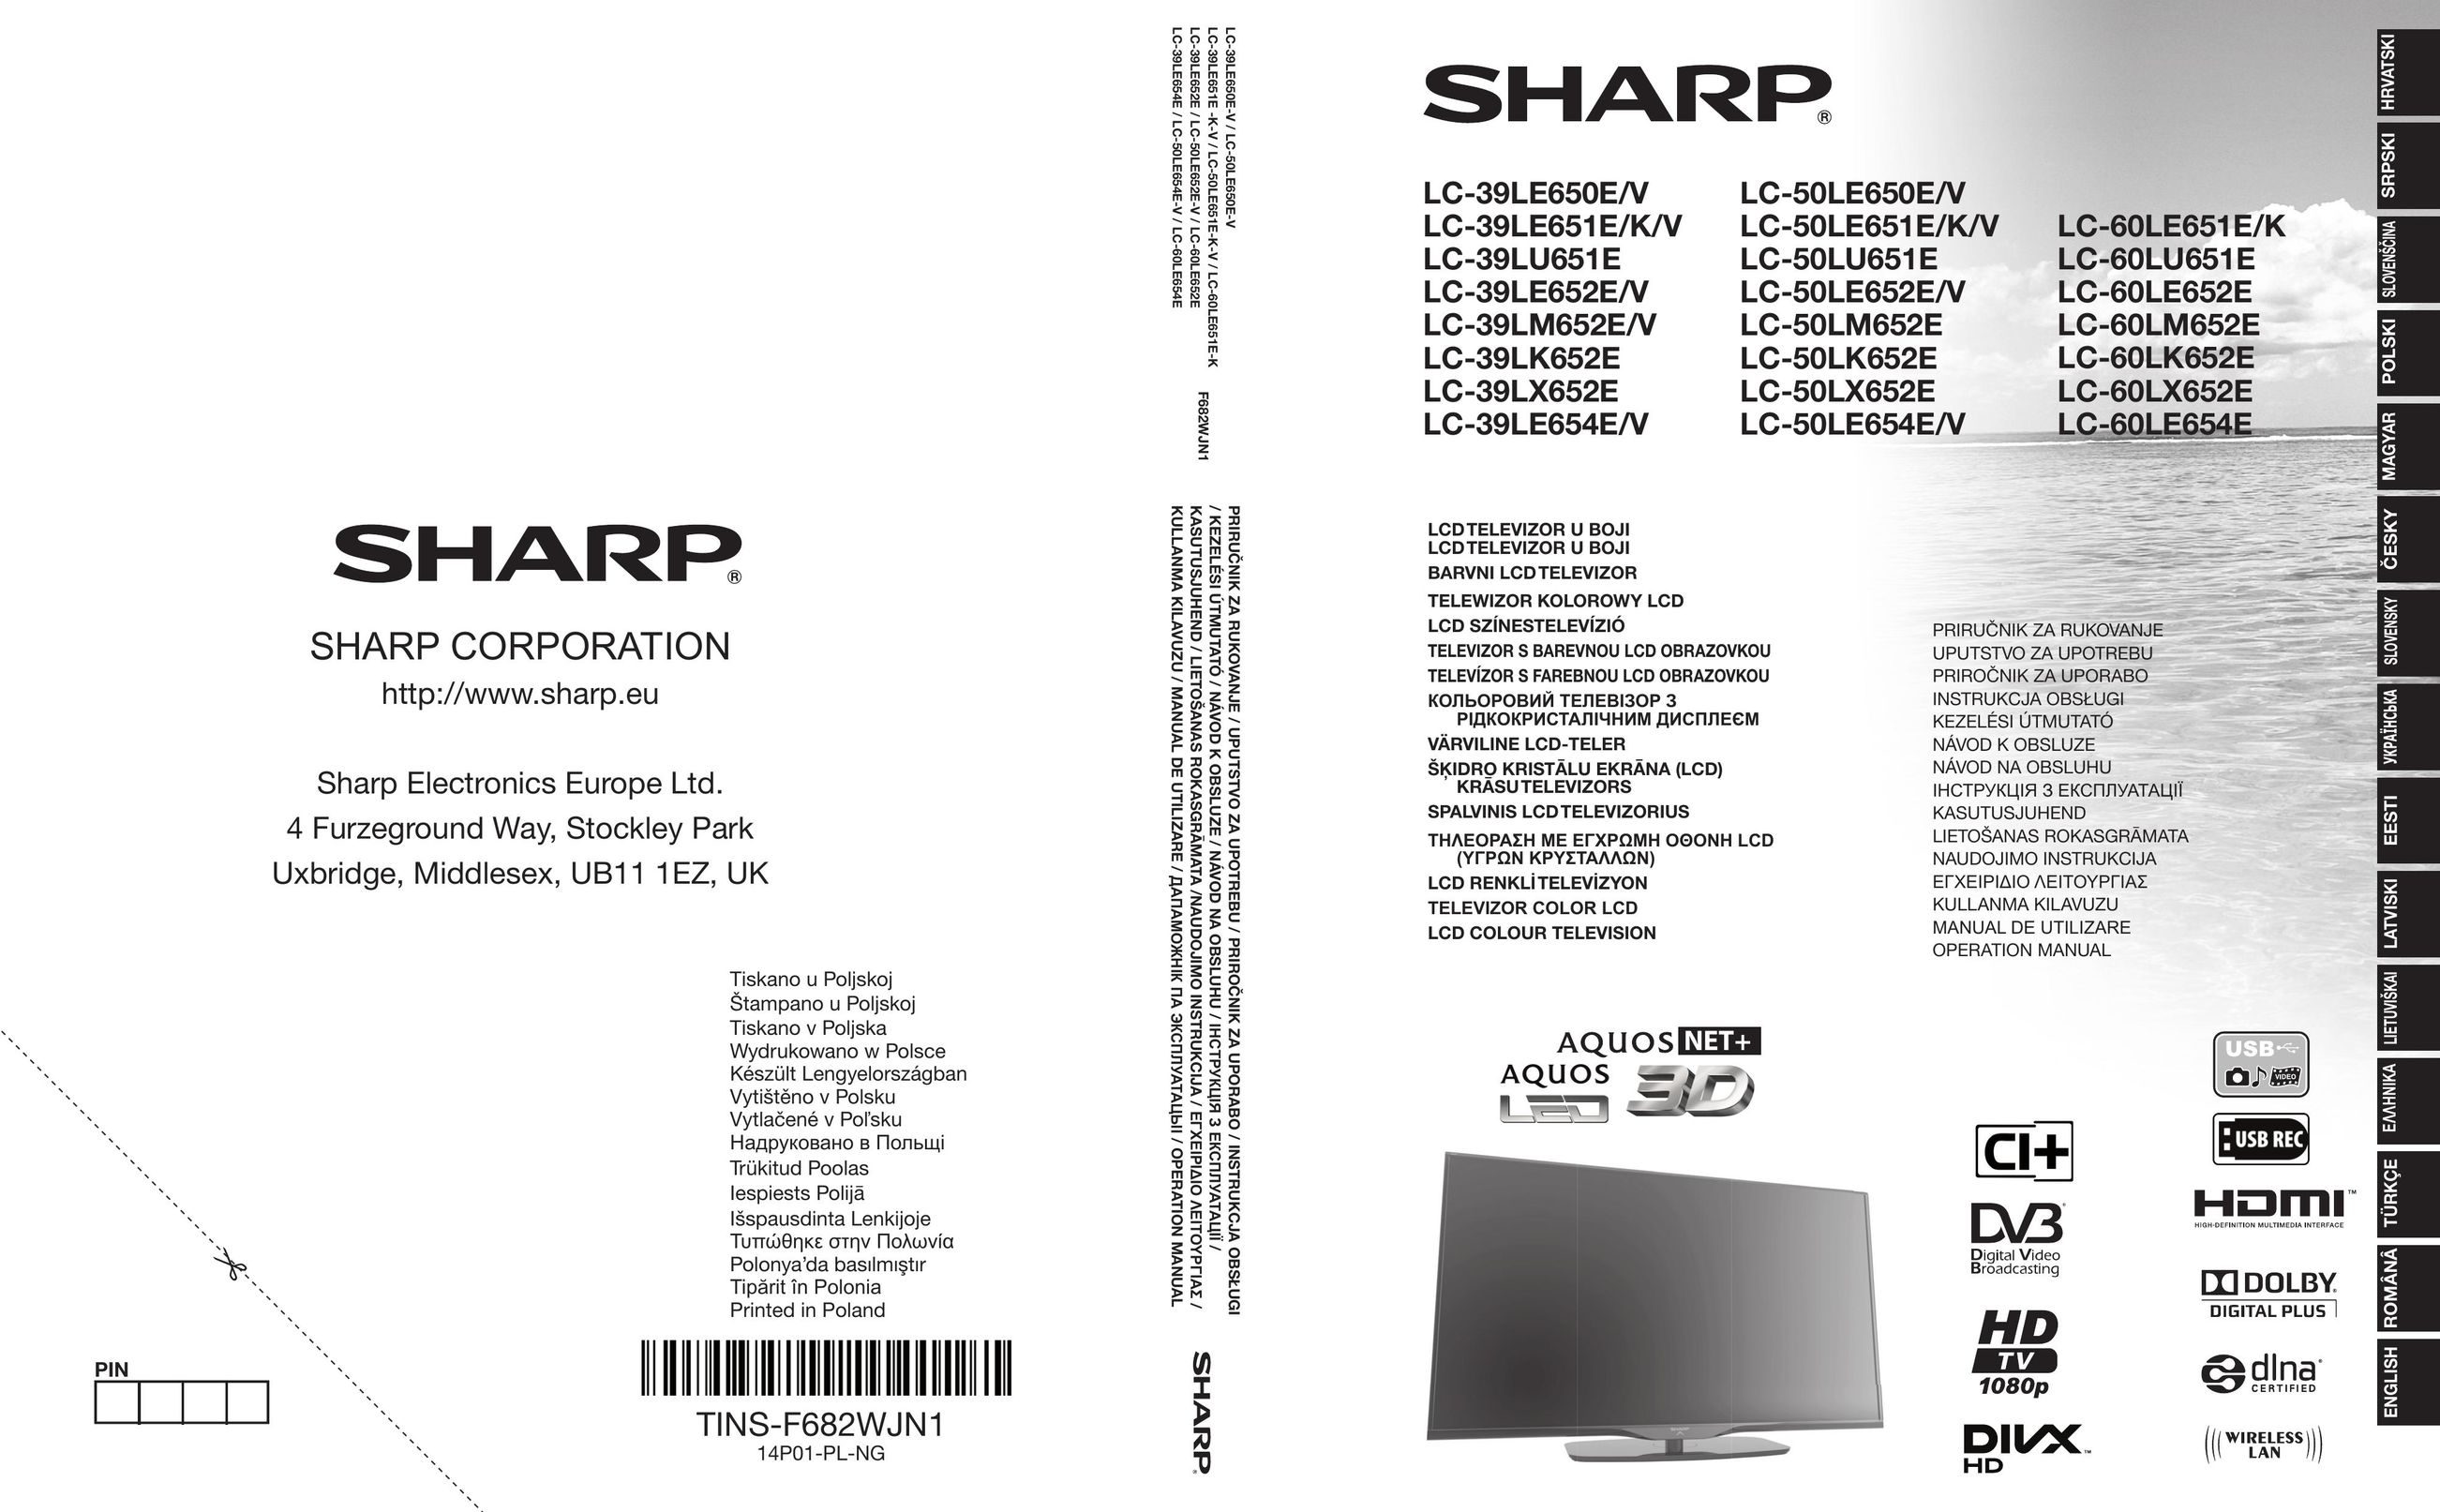 Sharp LC-50LK652E Car Video System User Manual